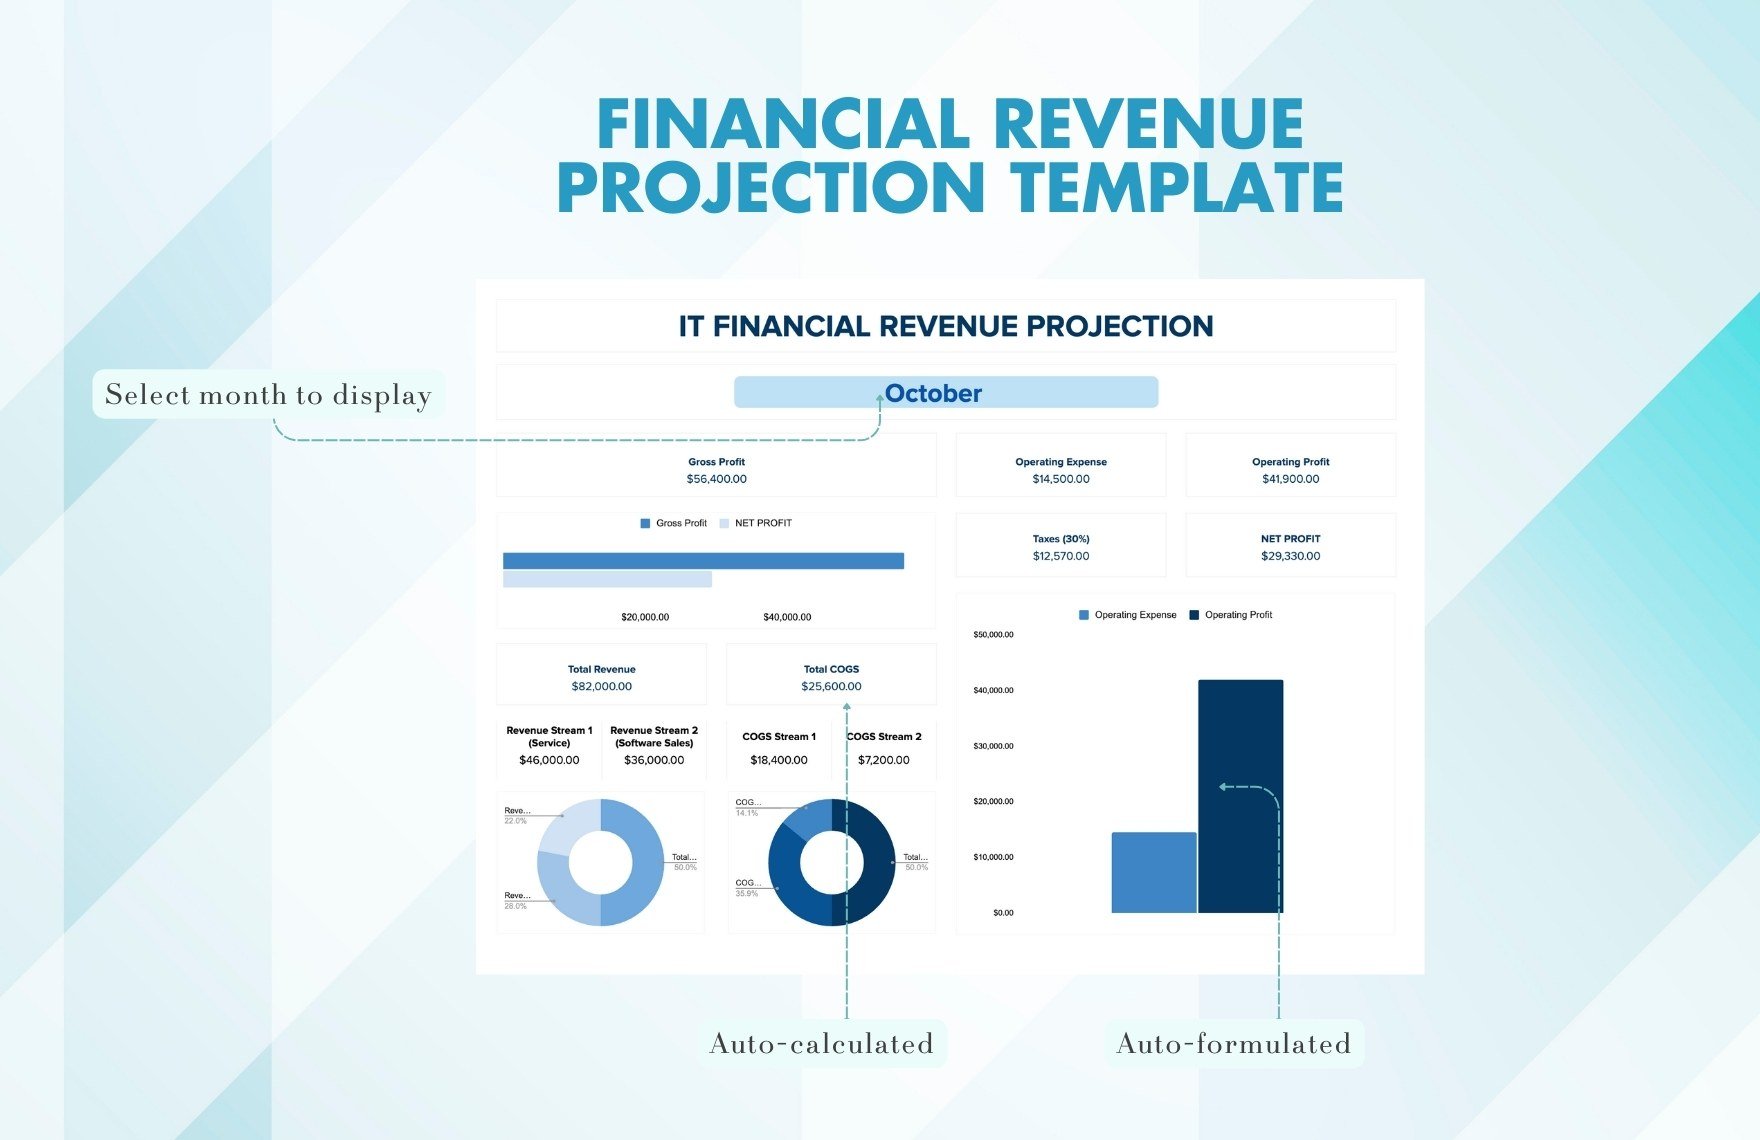 IT Financial Revenue Projection Template